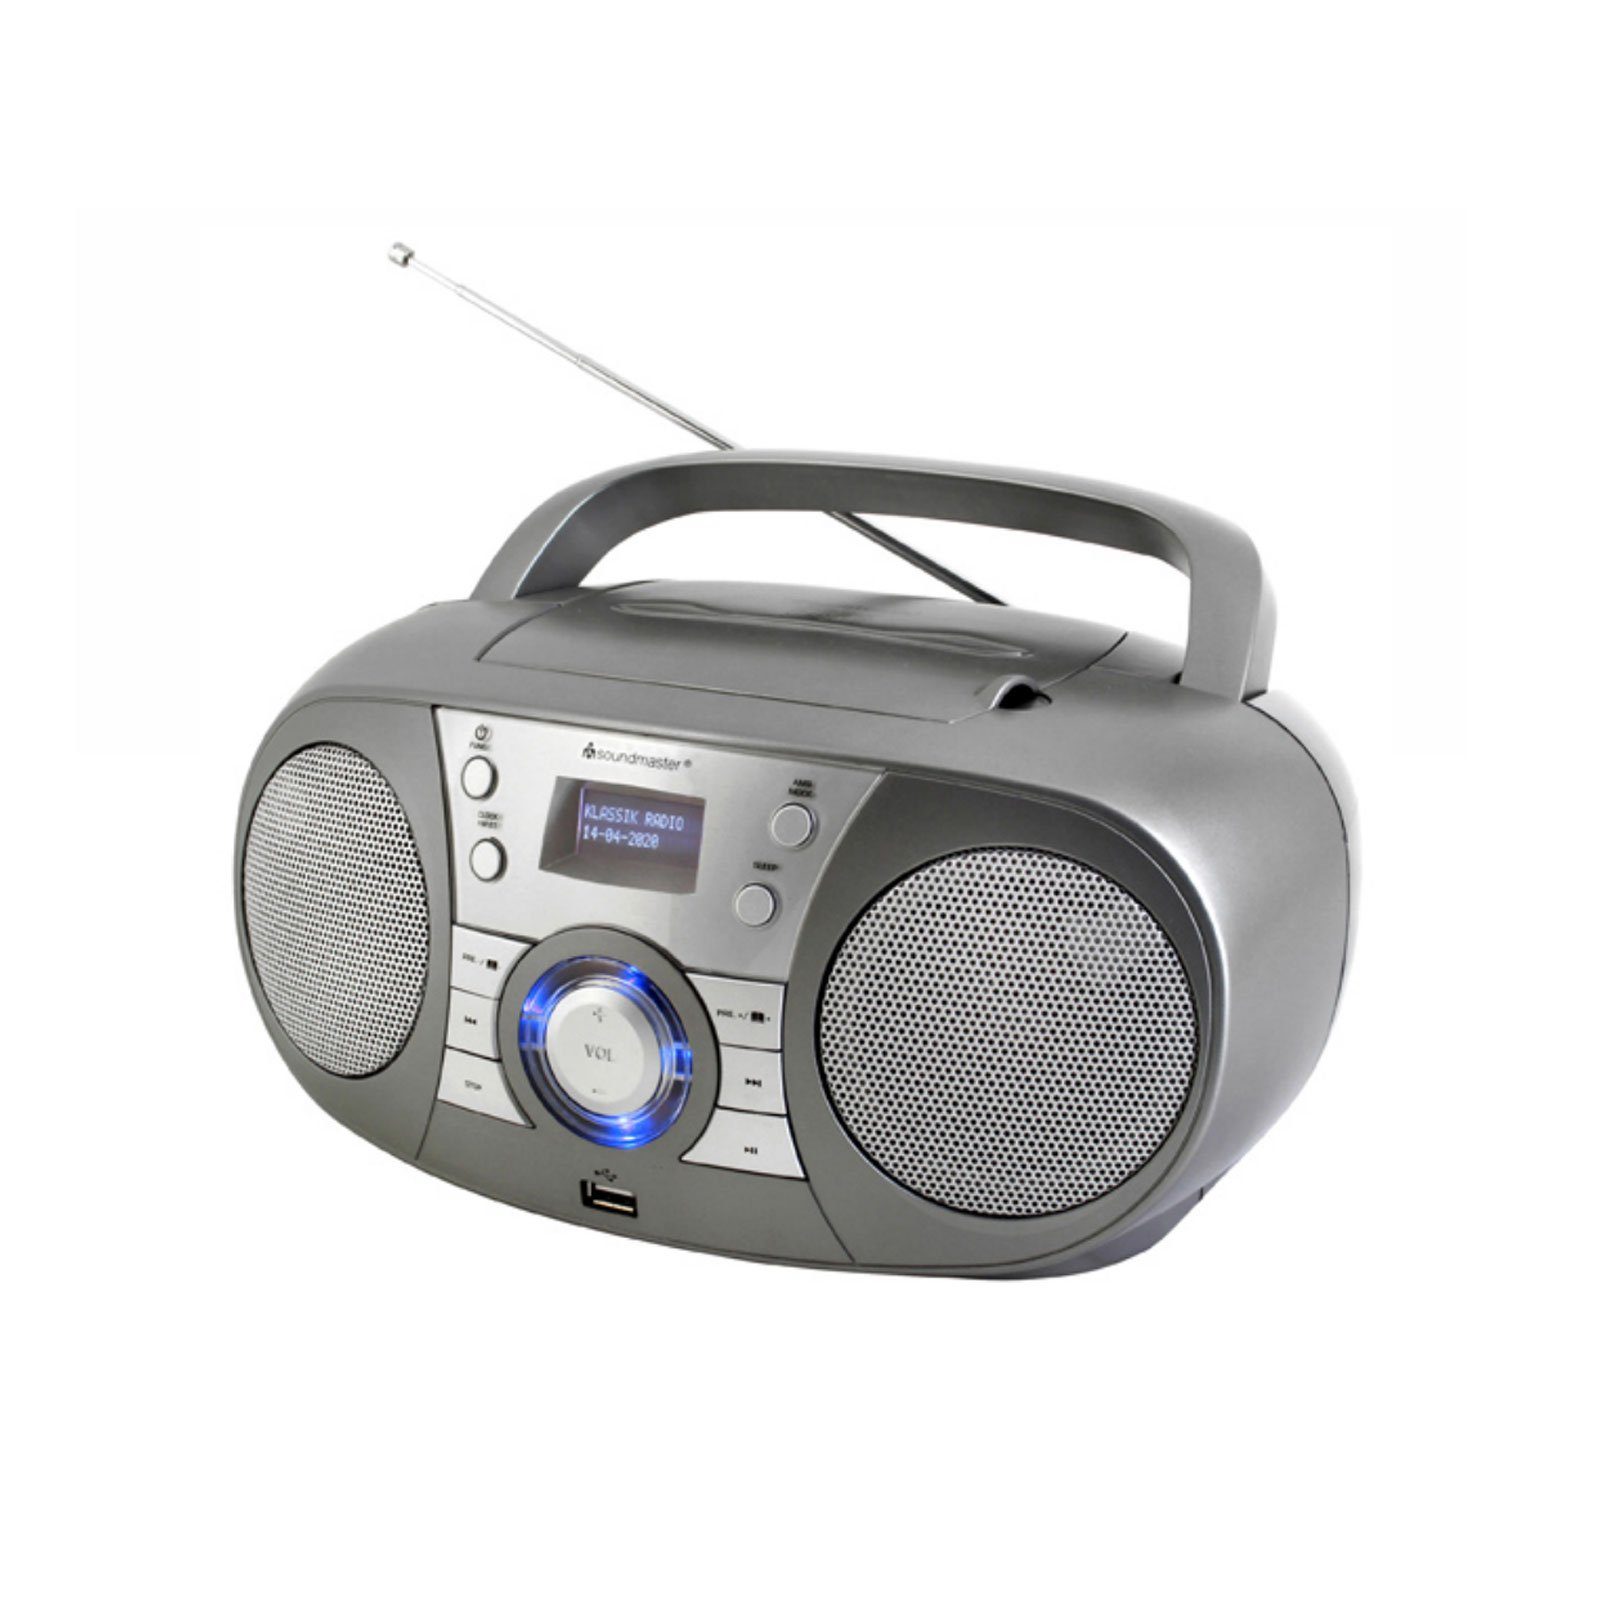 Soundmaster SCD1800TI Kompaktanlage (Wecken, Radiowiedergabe, CD-Wiedergabe,  Wecker, Snooze-Funktion, AUX-Eingang, Bluetooth, USB, DAB+ Radio, CD, CD-R,  CD-RW, CD-MP3)